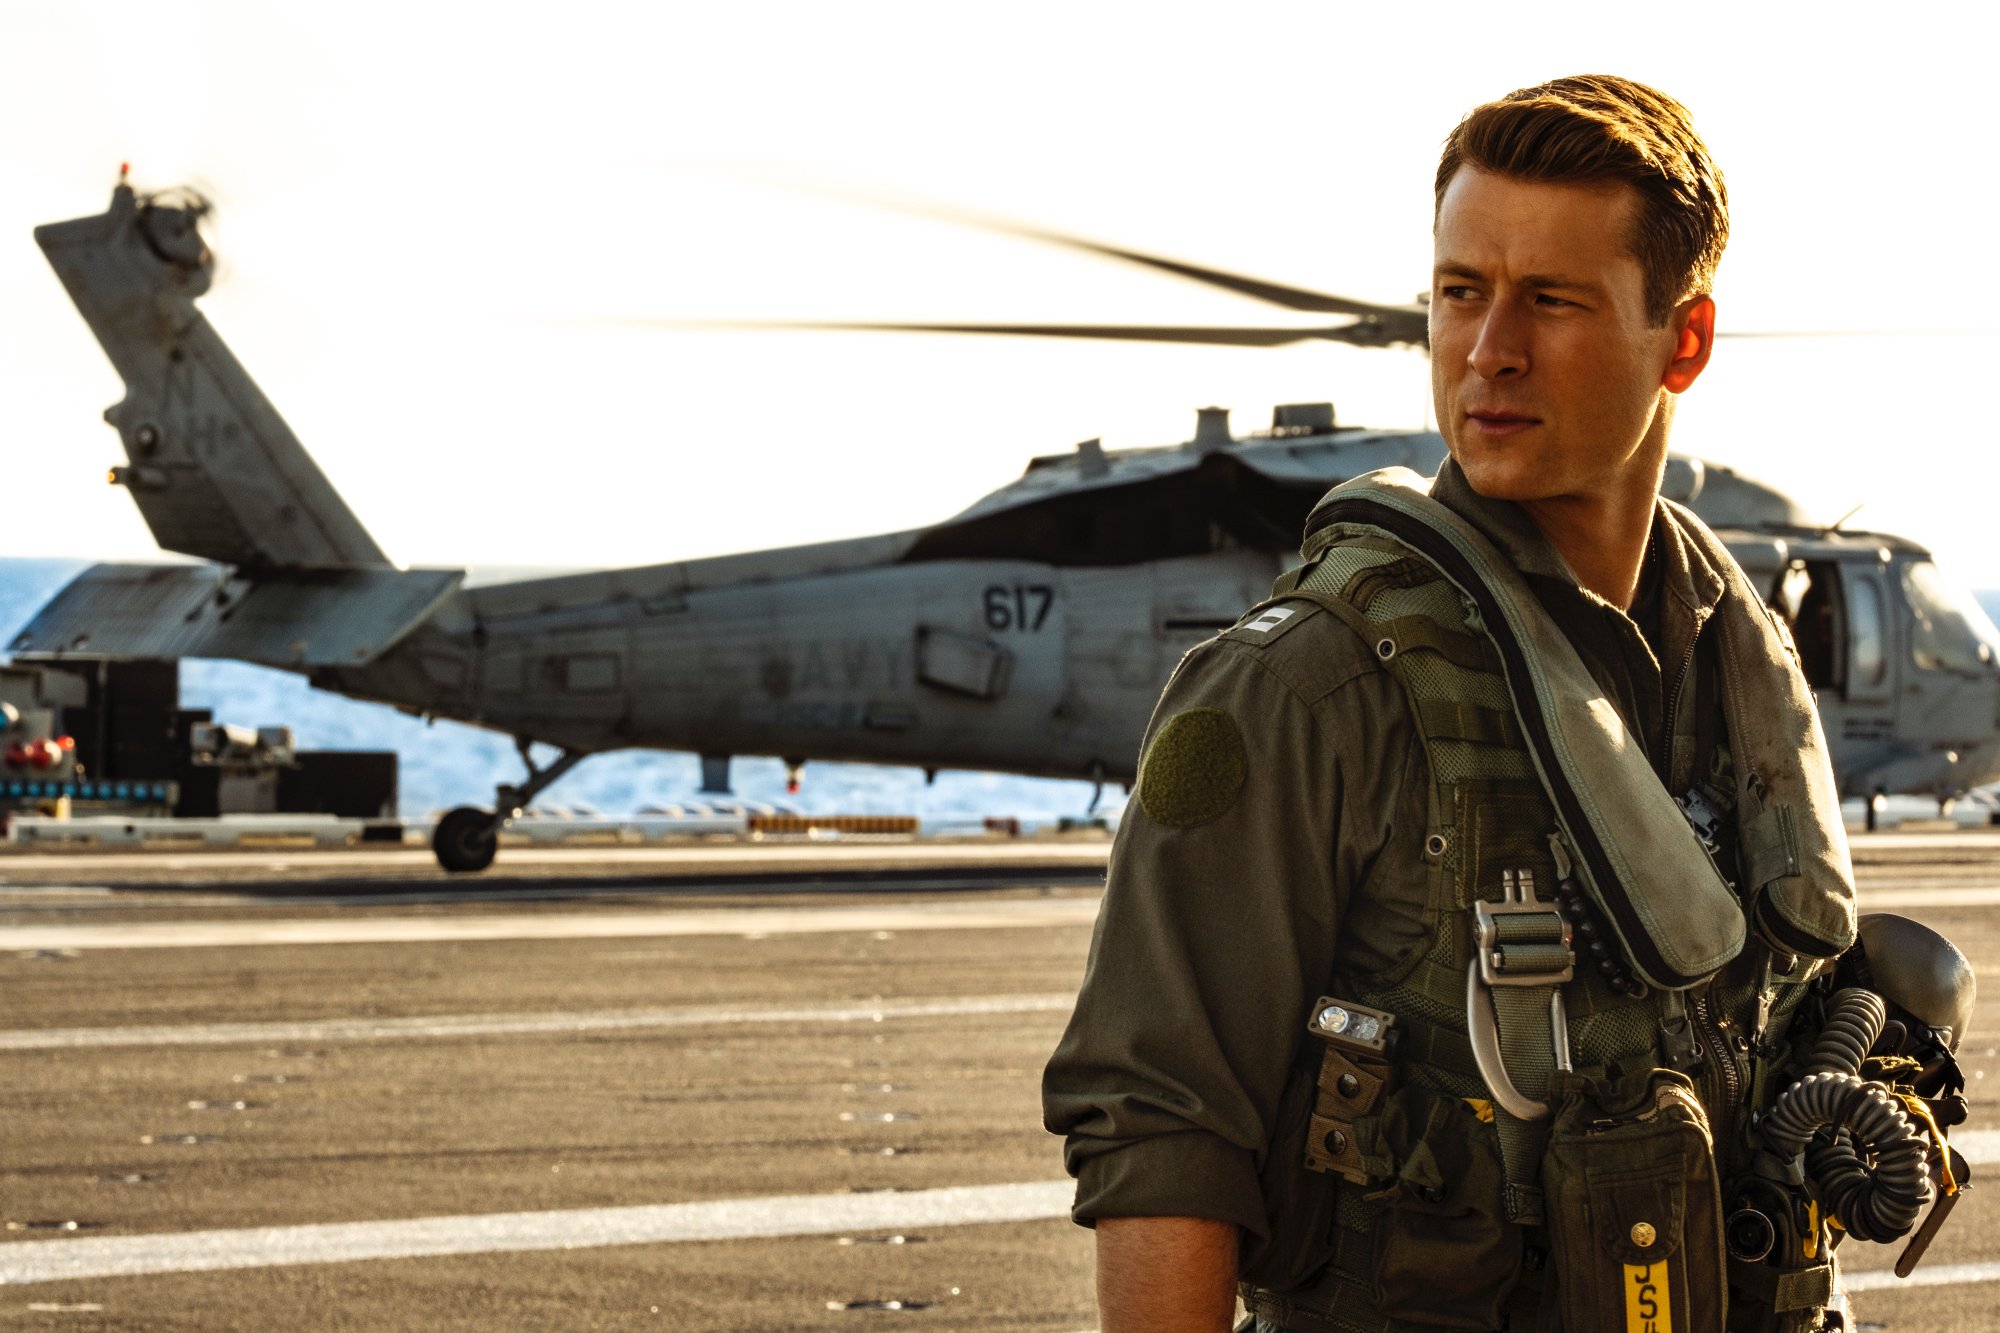 'Top Gun: Maverick' Glen Powell as Hangman wearing a uniform in front of a helicopter